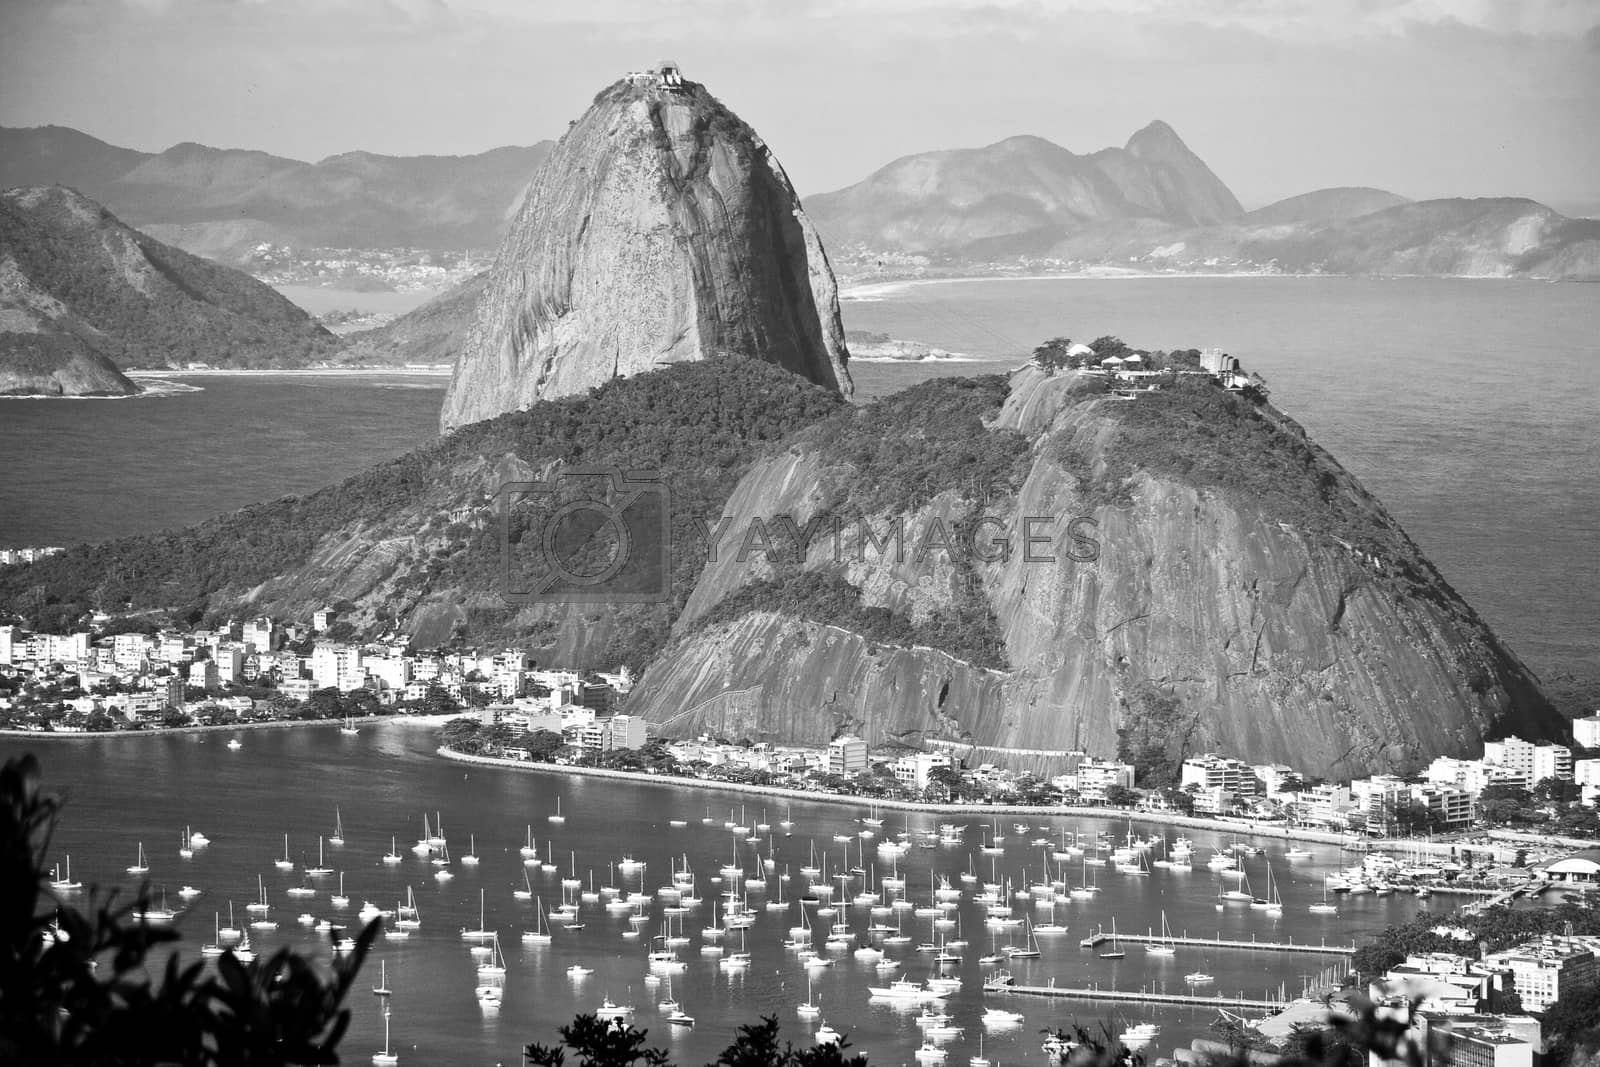 Royalty free image of Rio de Janeiro by CelsoDiniz